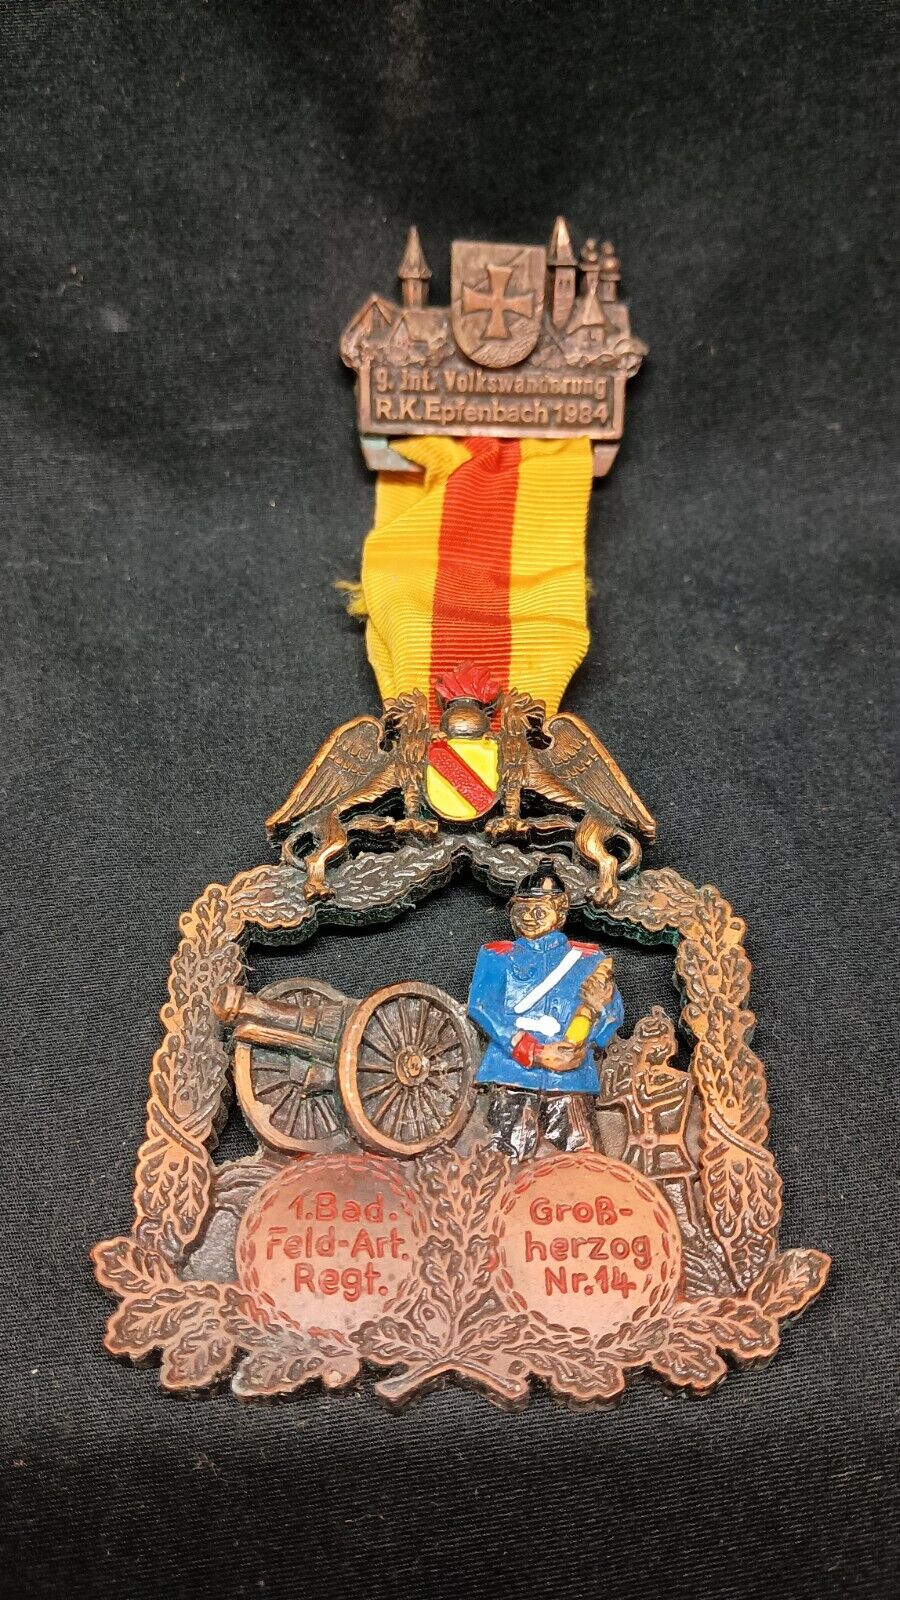 Vintage German 9 Int. Volkswanderung R.K. Epfenbach 1984 Medal Soldier & Cannon